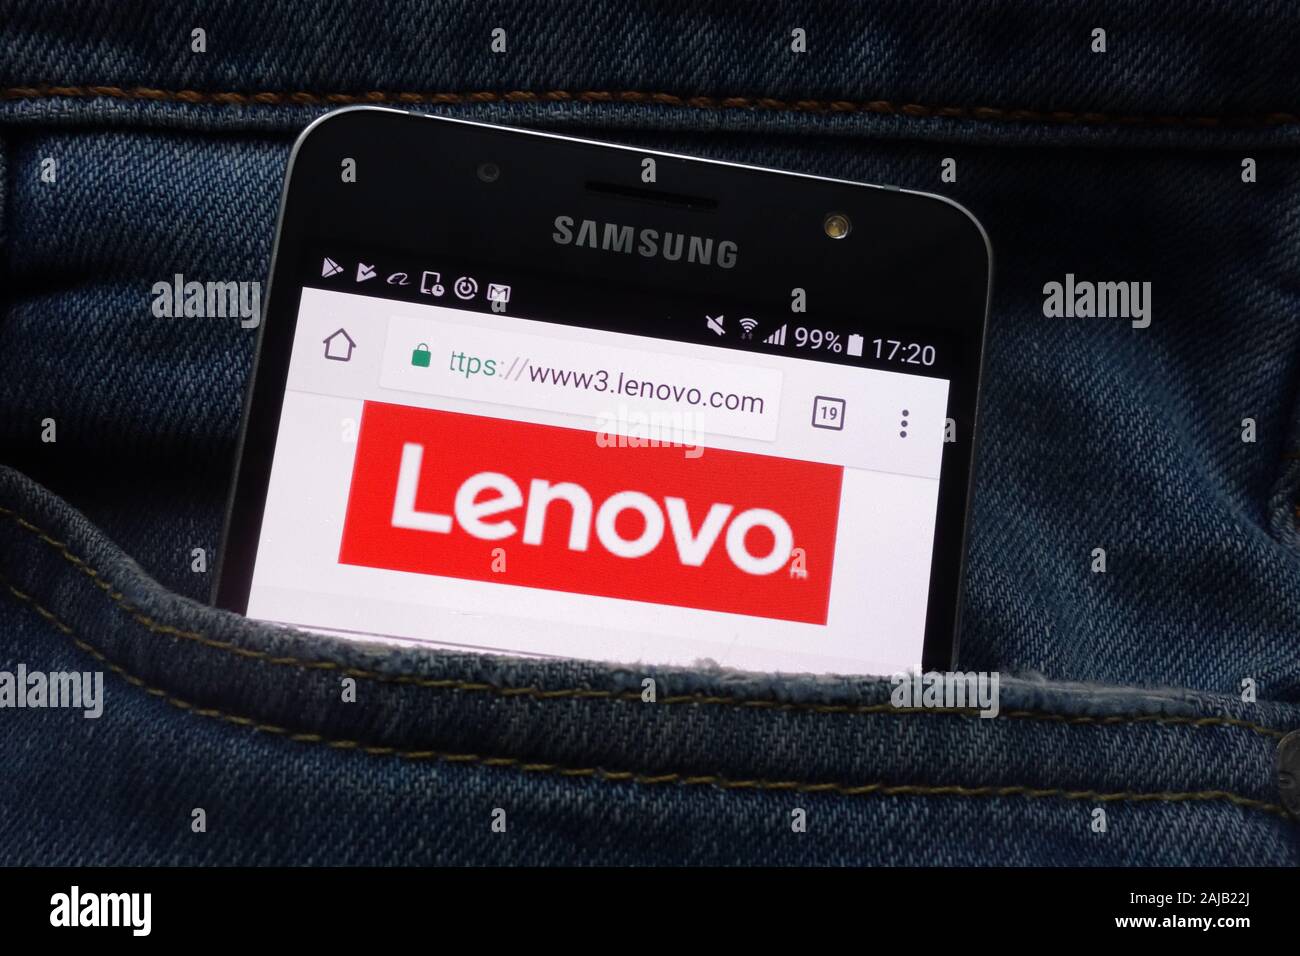 Lenovo website displayed on Samsung smartphone hidden in jeans pocket Stock Photo